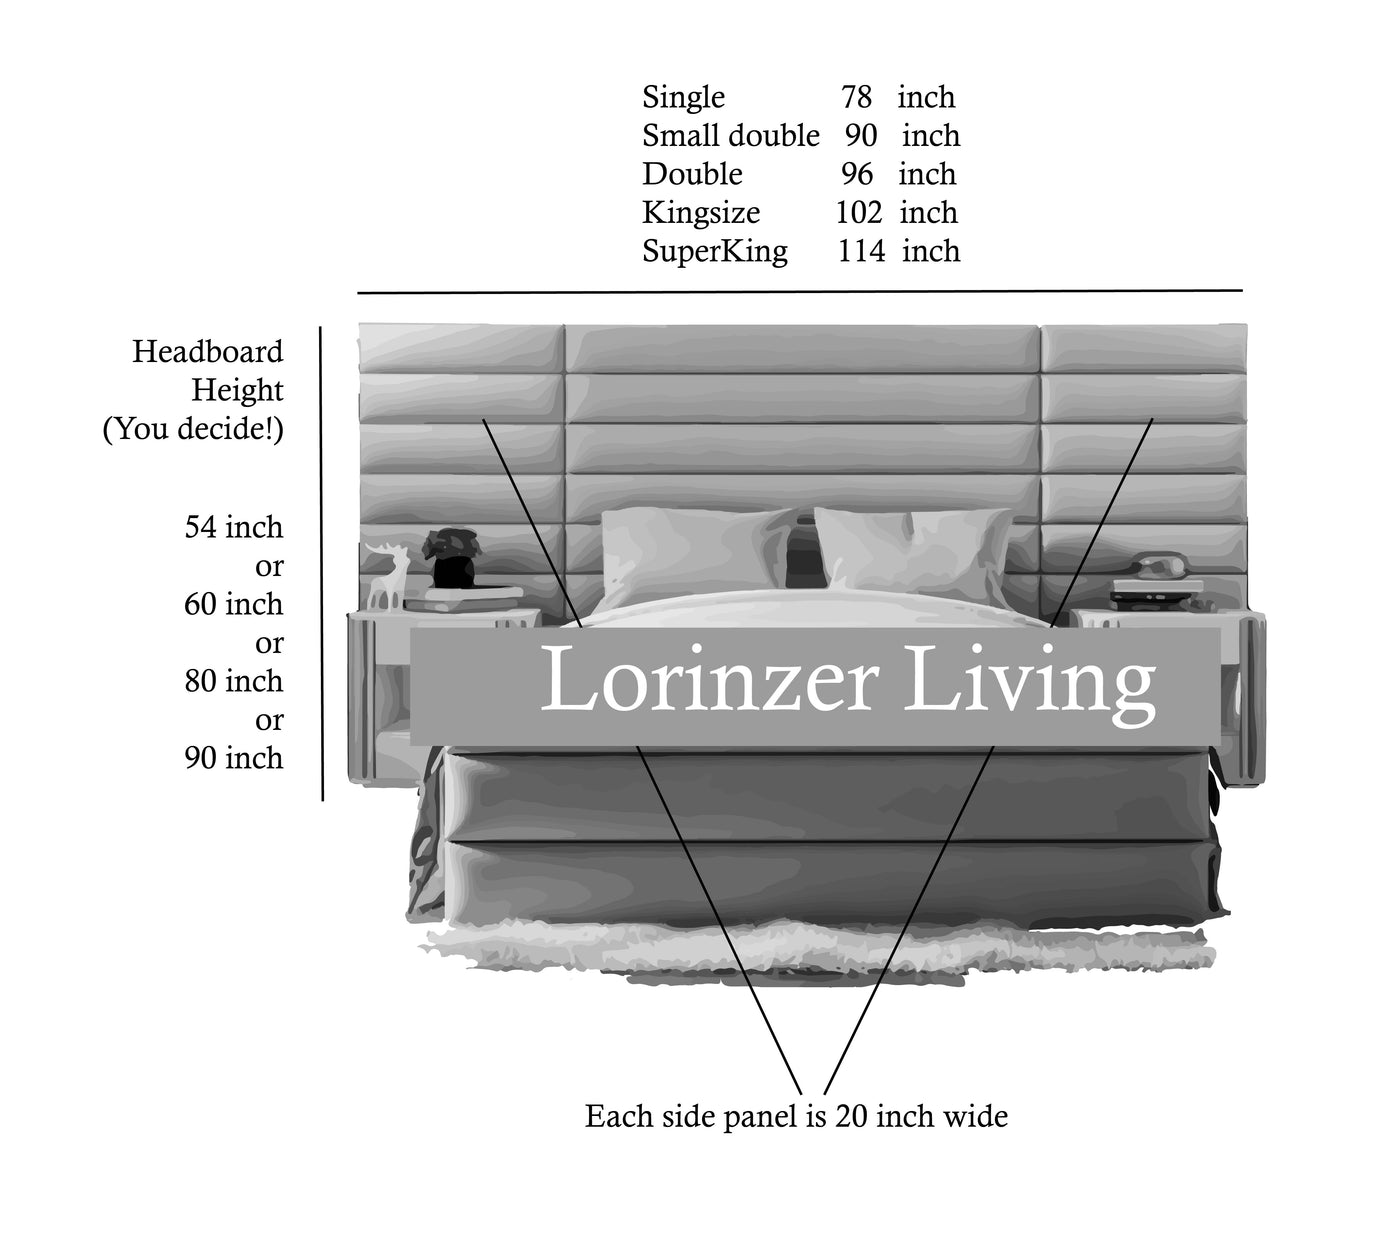 Singapore green panel headboard bed | Lorinzer Living